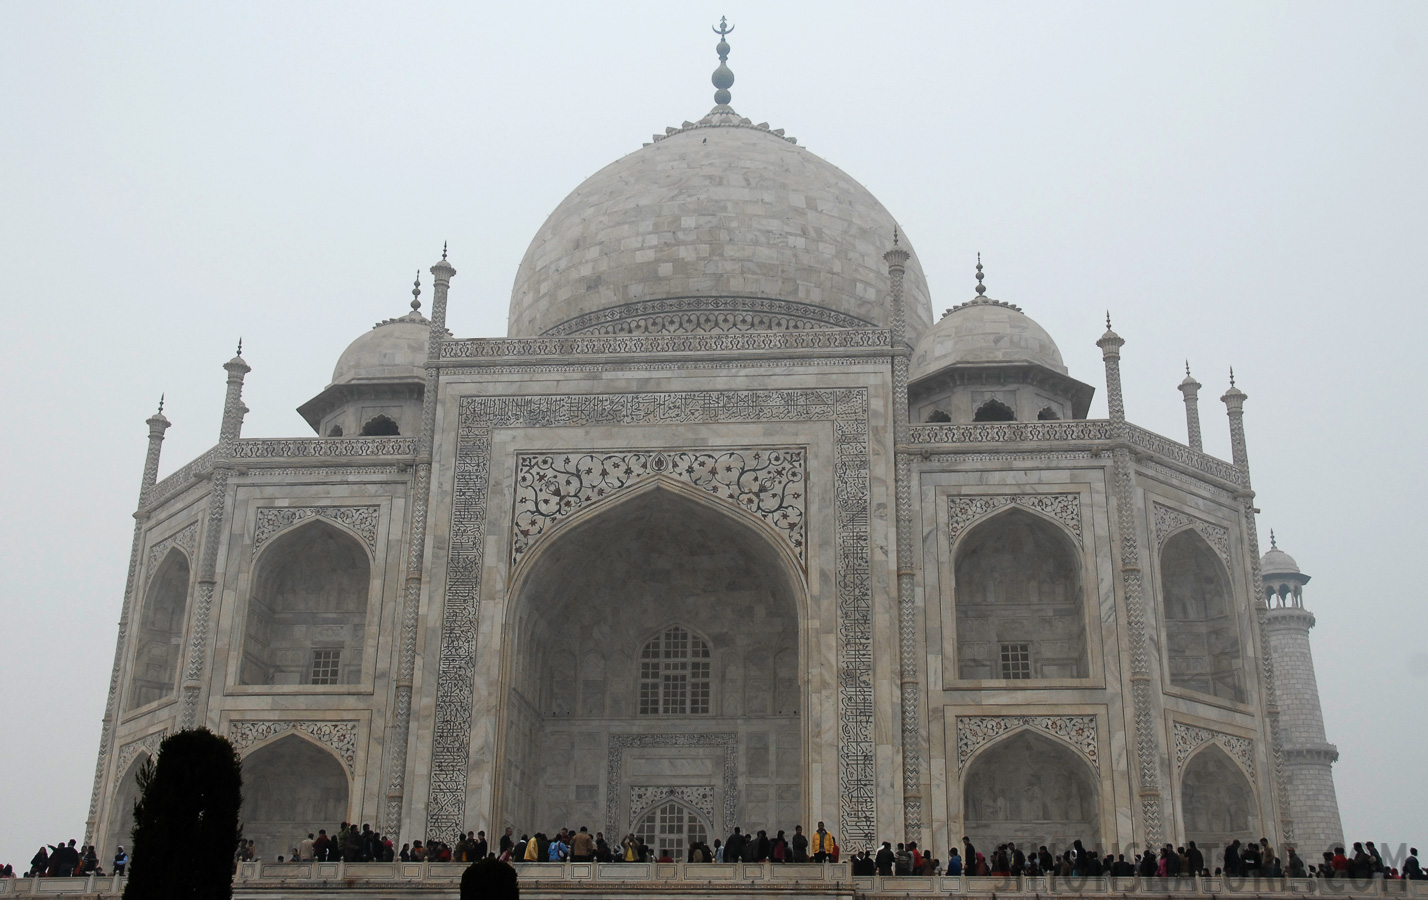 Taj Mahal [24 mm, 1/90 sec at f / 7.1, ISO 400]